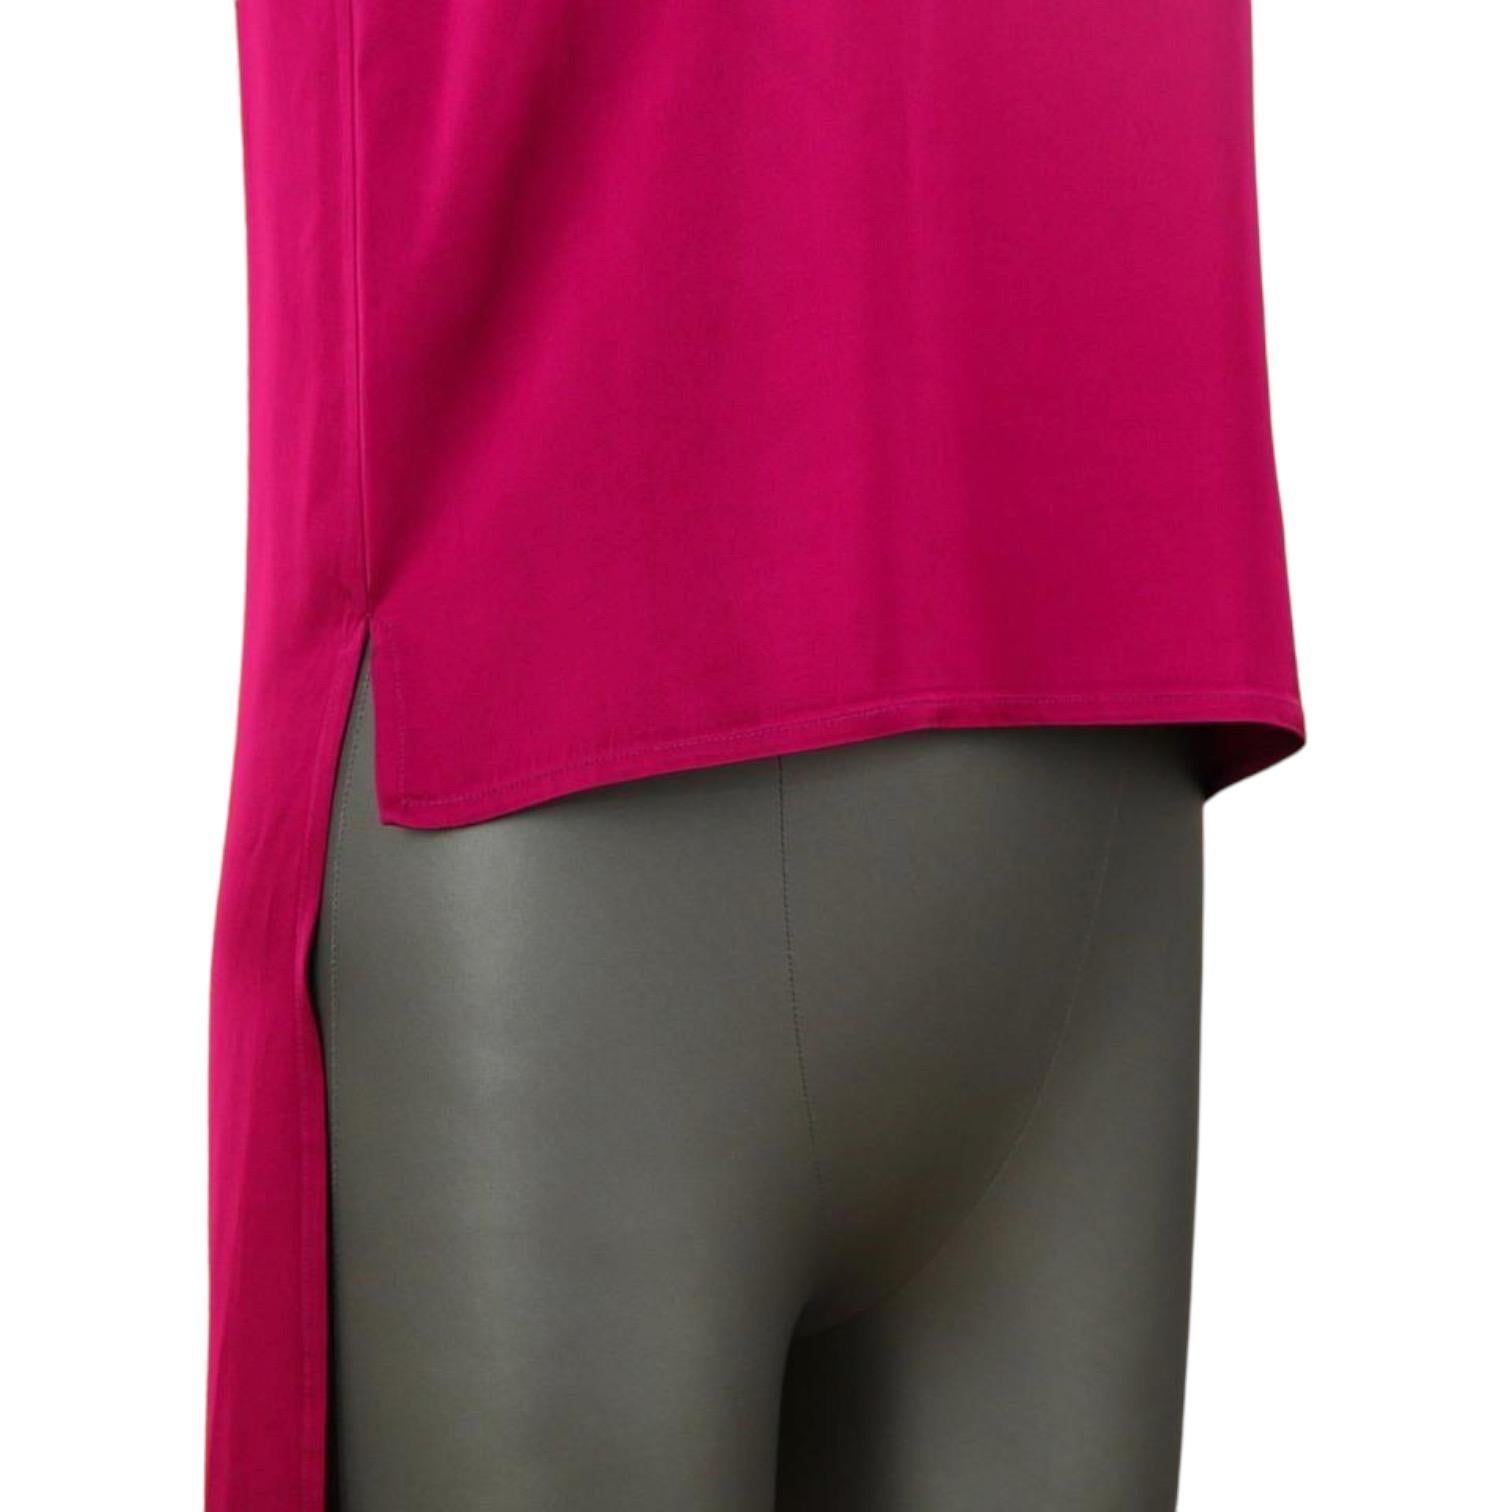 STELLA MCCARTNEY Sleeveless Tunic Blouse Shirt Top Red Viscose Scoop Neck Sz 38 For Sale 1